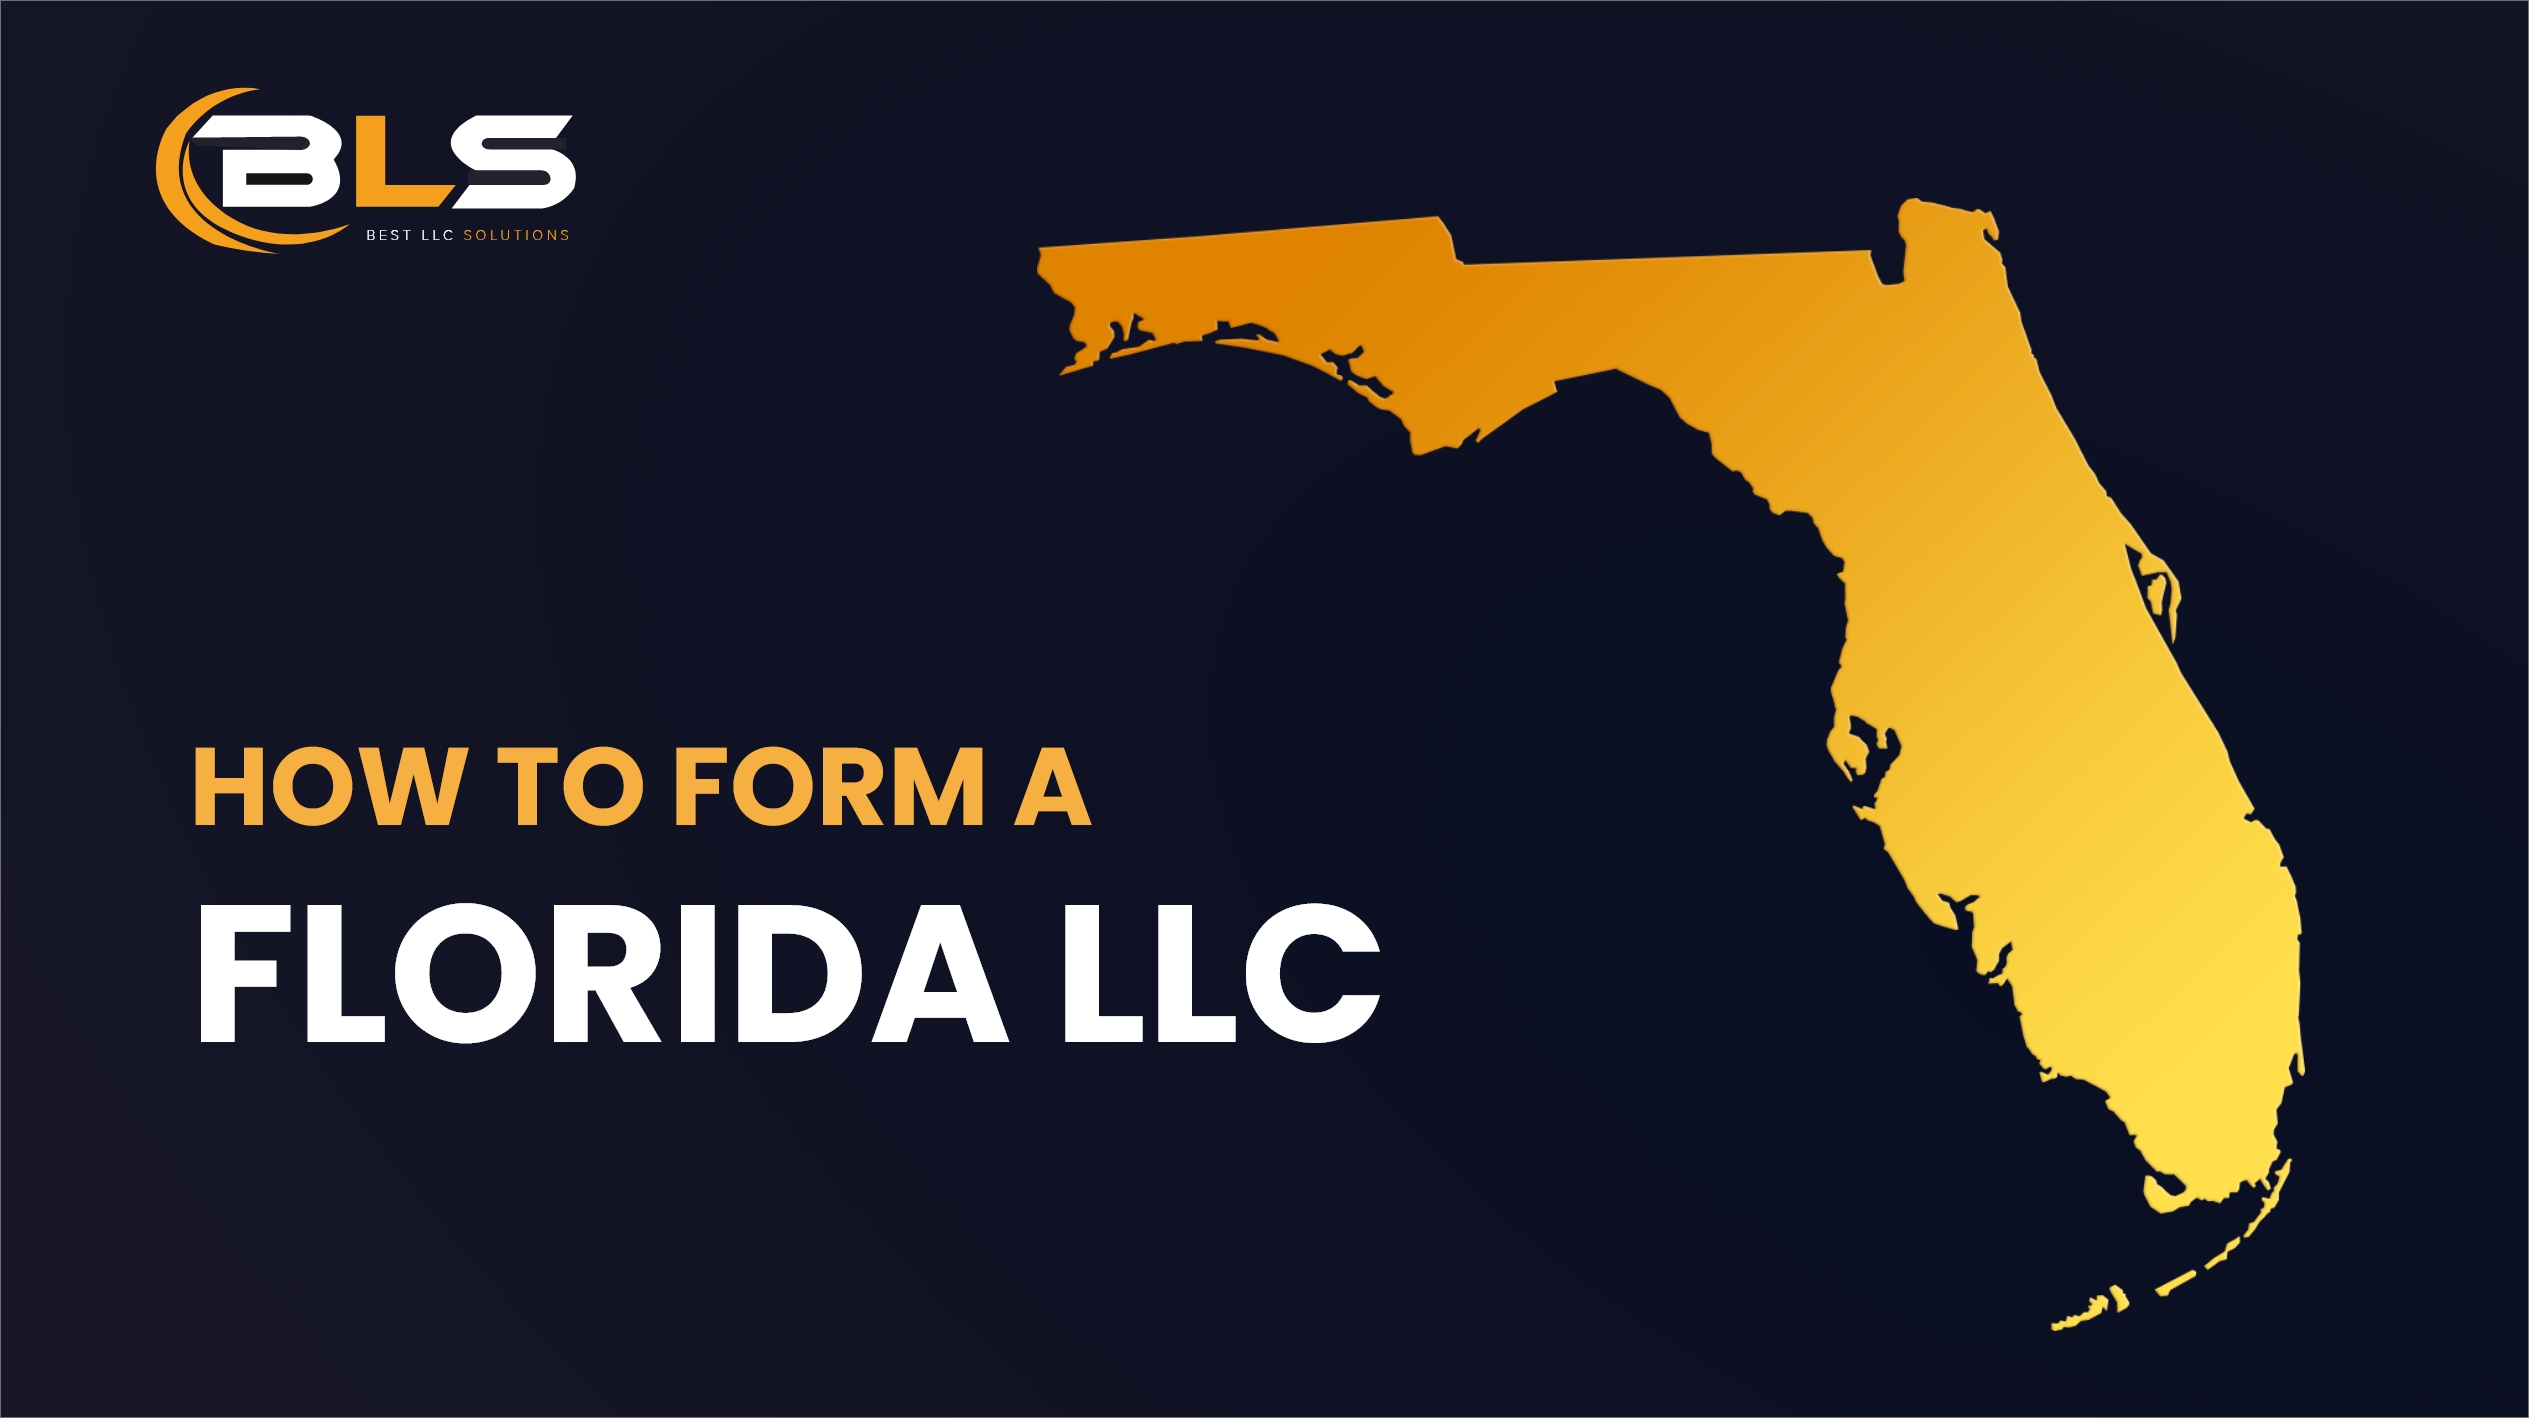 Florida LLC